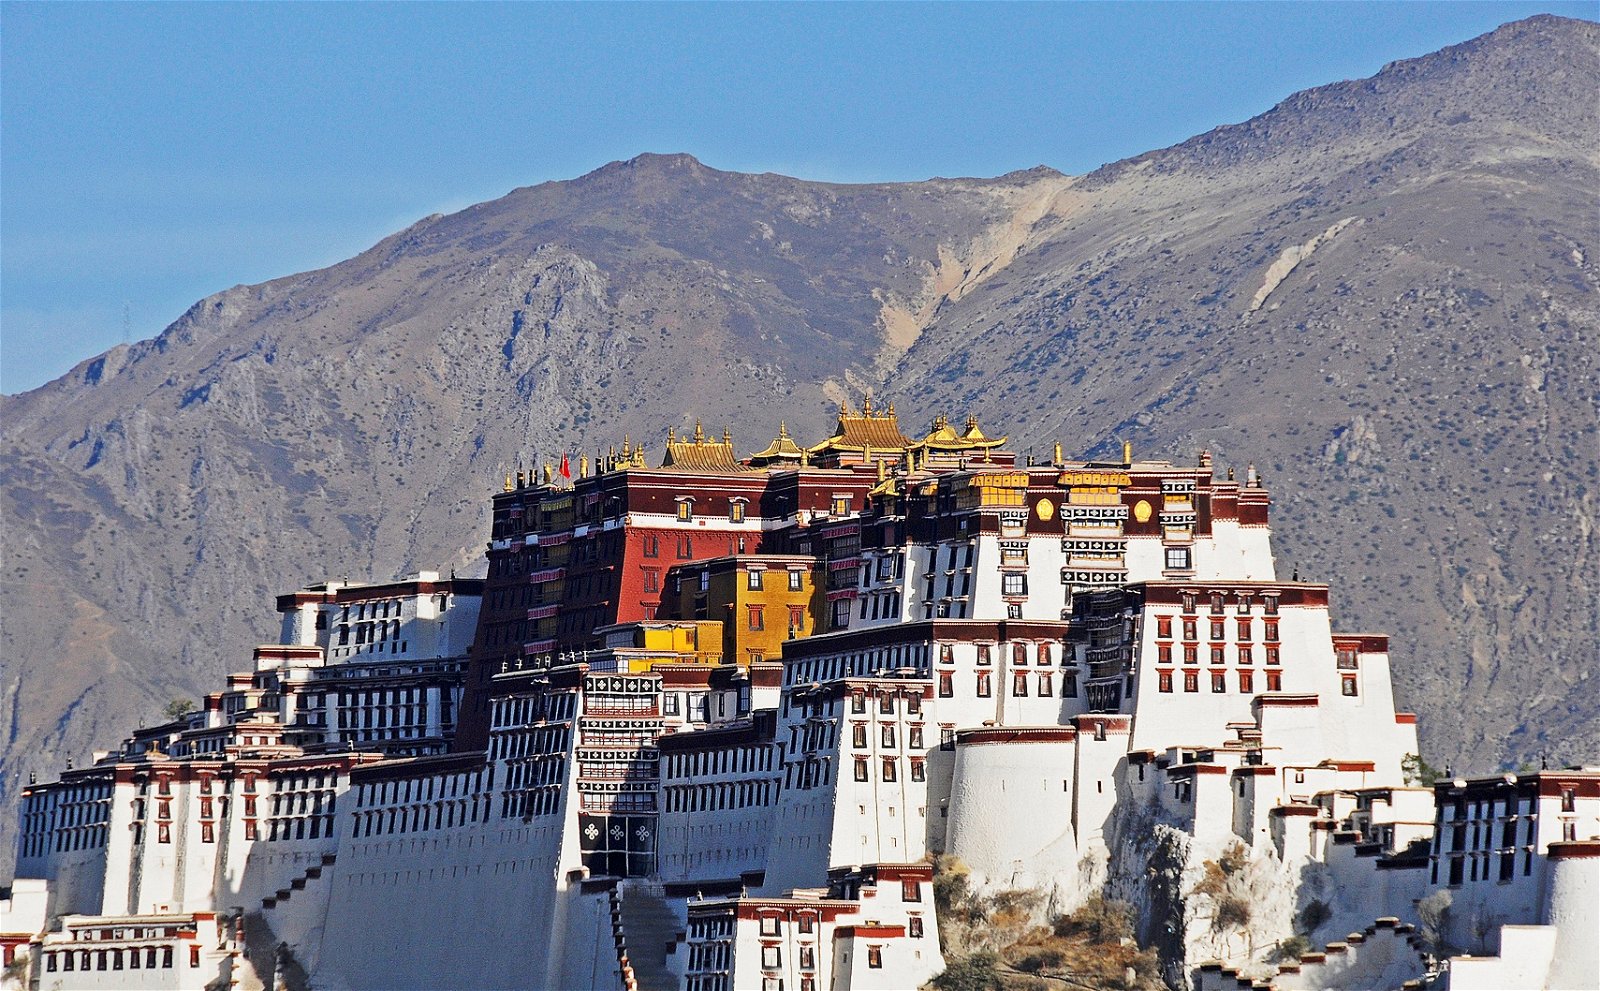 Nepal Tibet Travel: Kathmandu Lhasa Overland Tour II